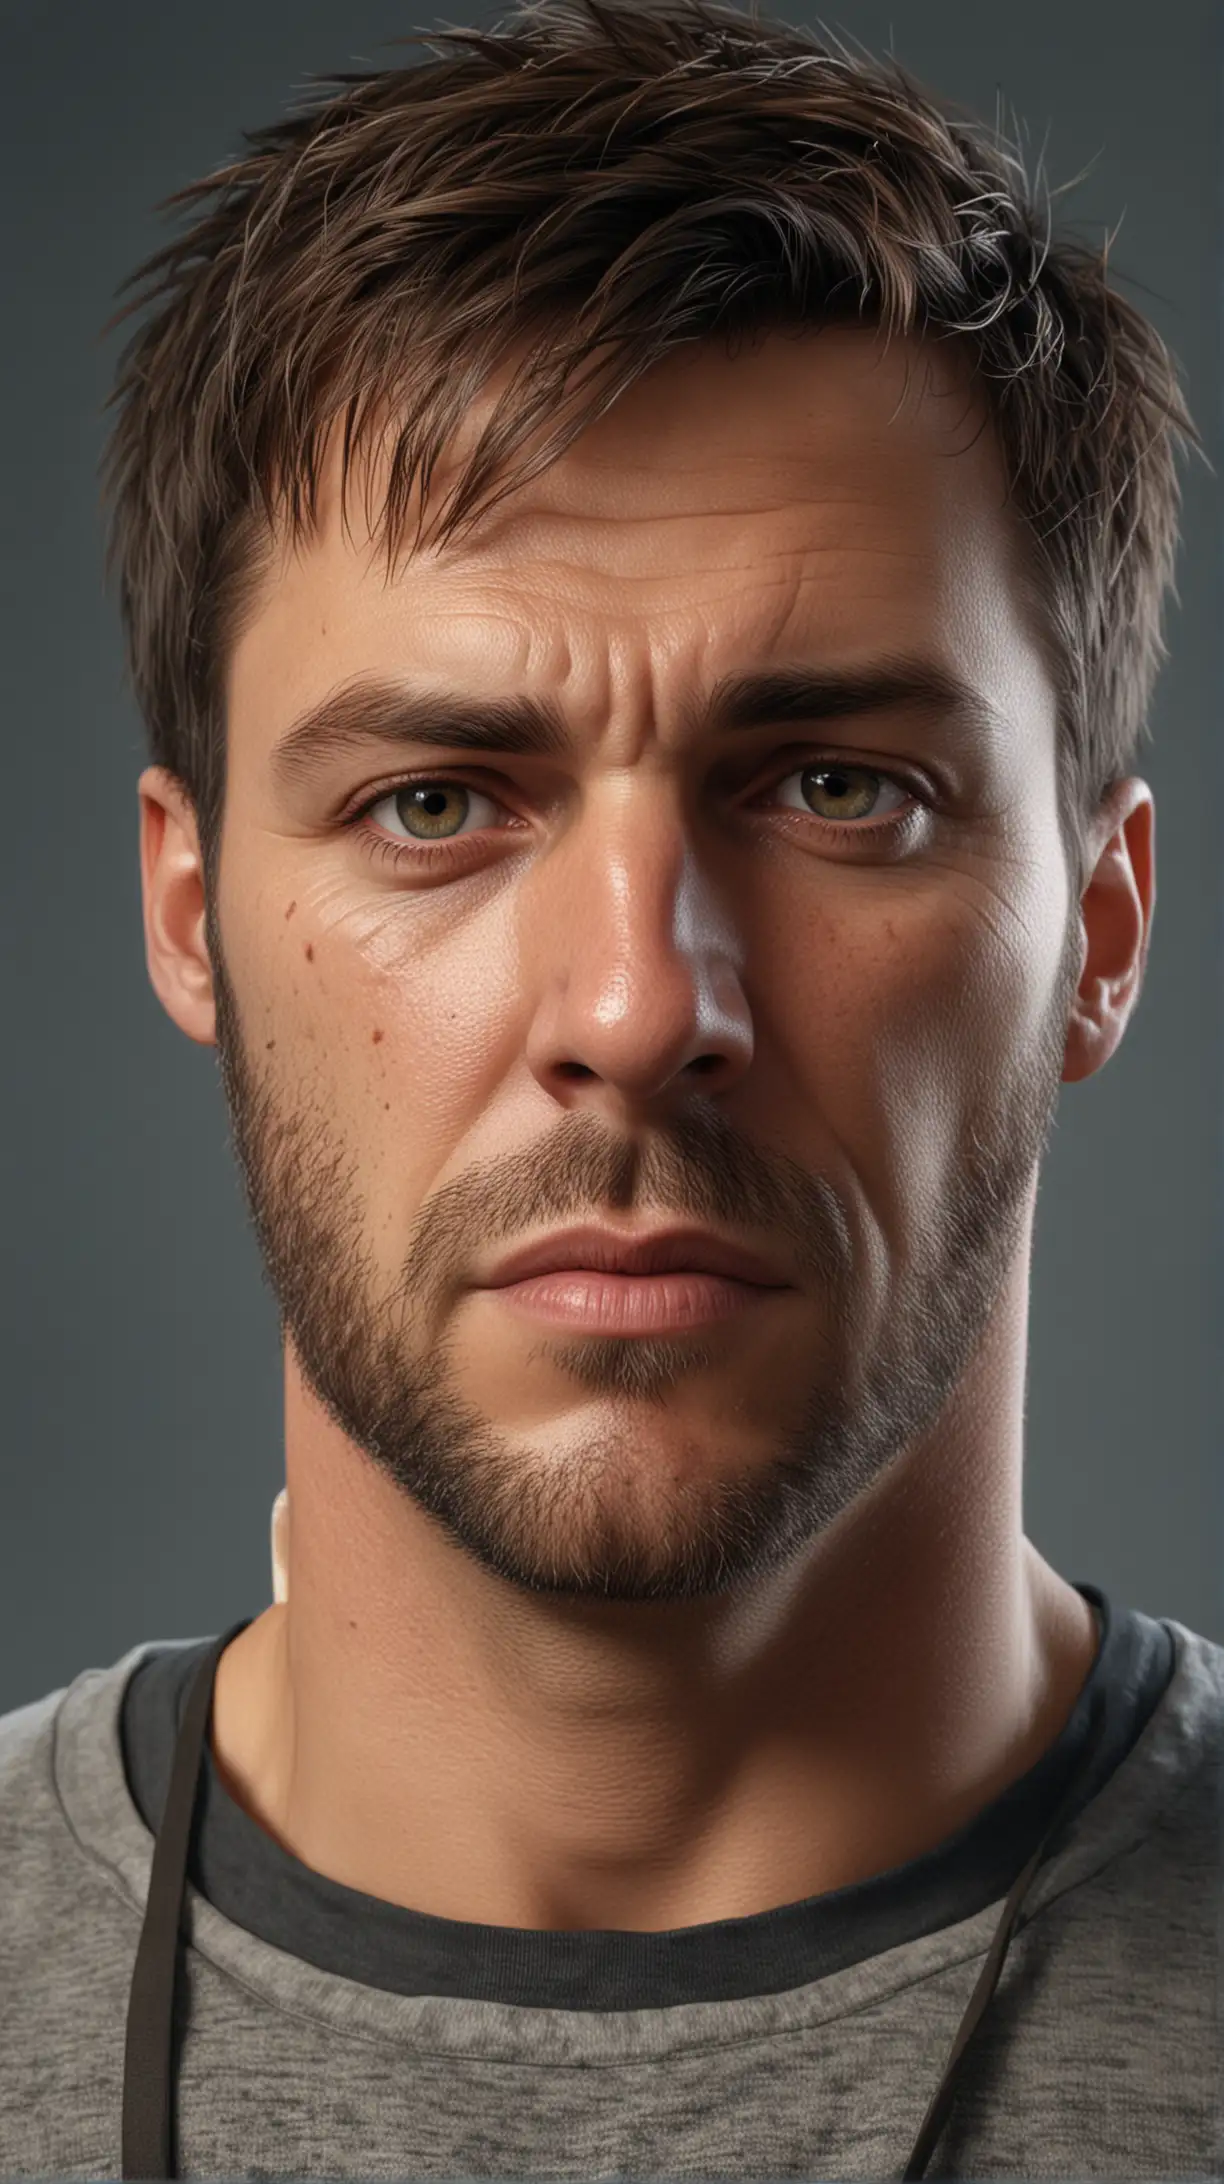 HyperRealistic Medium Shot Portrait of a Normal Man in 4K HDR